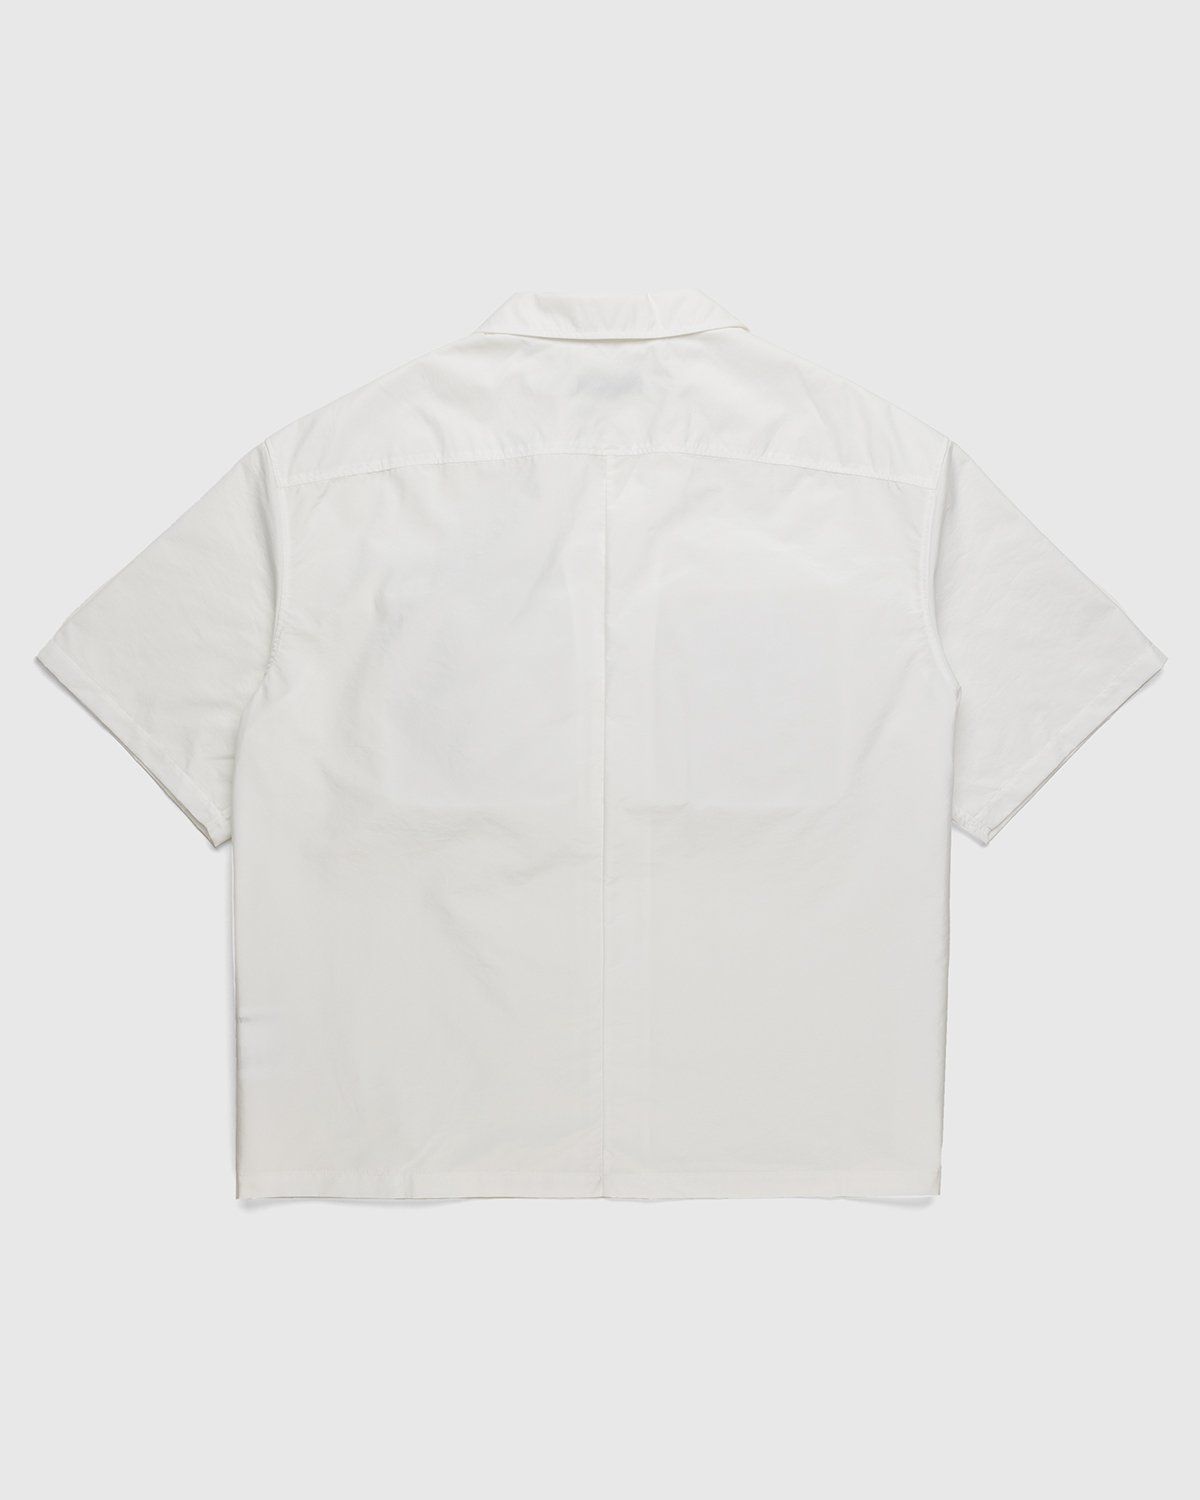 A-COLD-WALL* – Cuban Collar Shirt White - Image 2